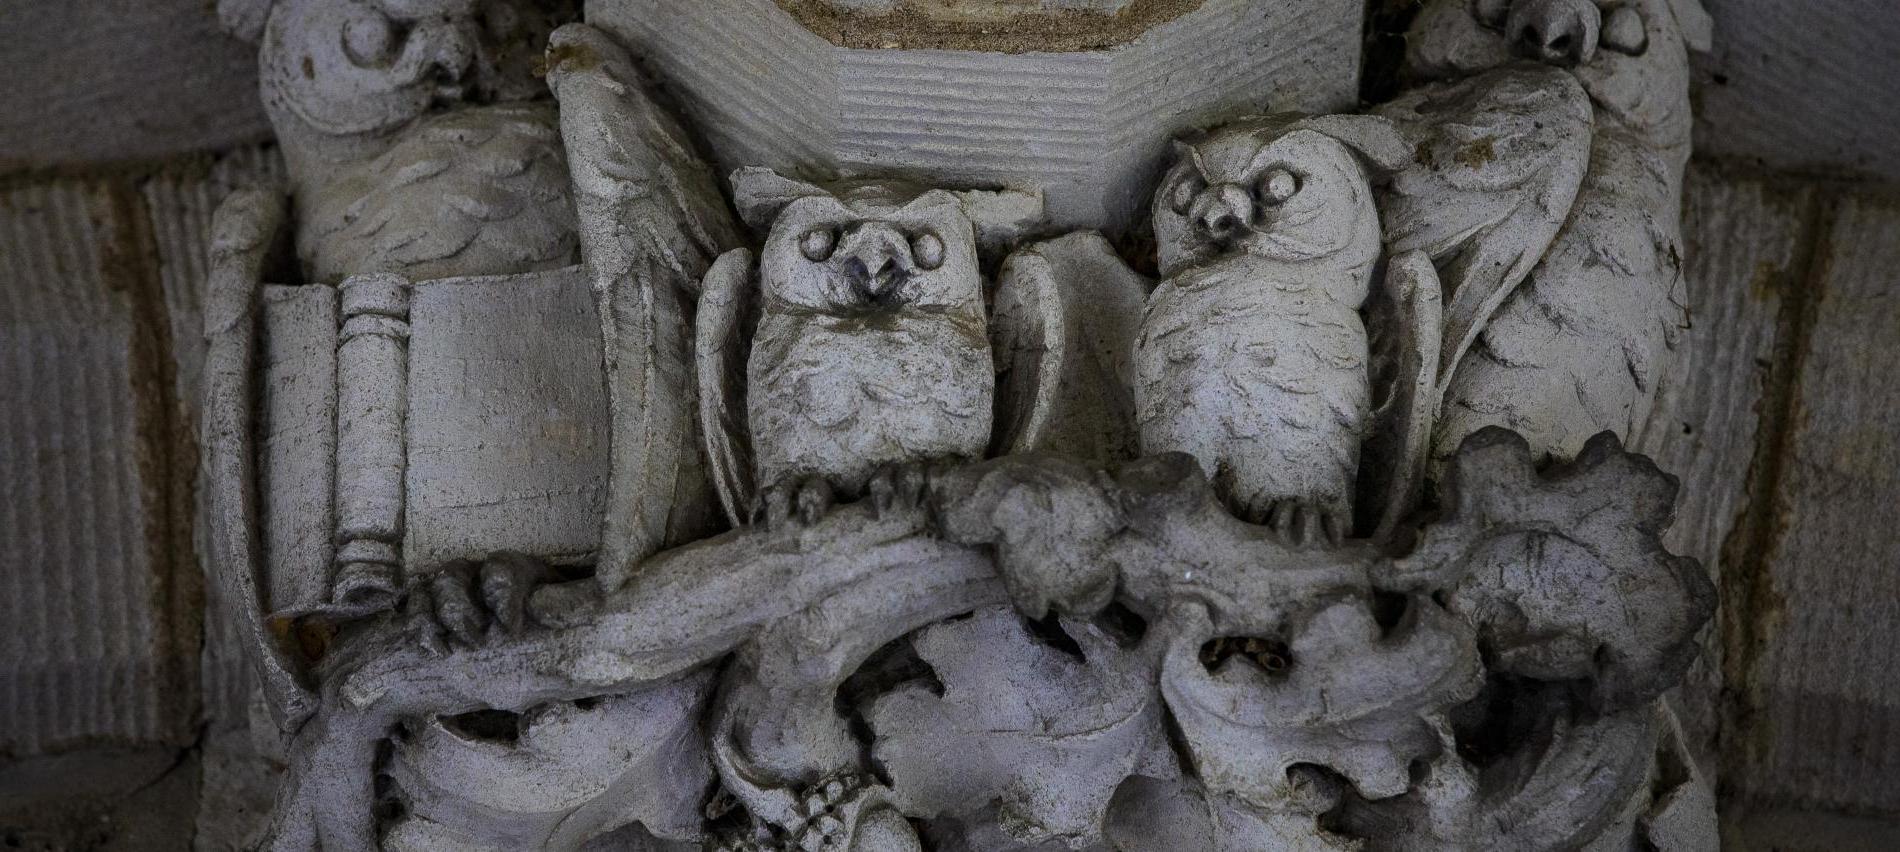 owl ornamentation on building